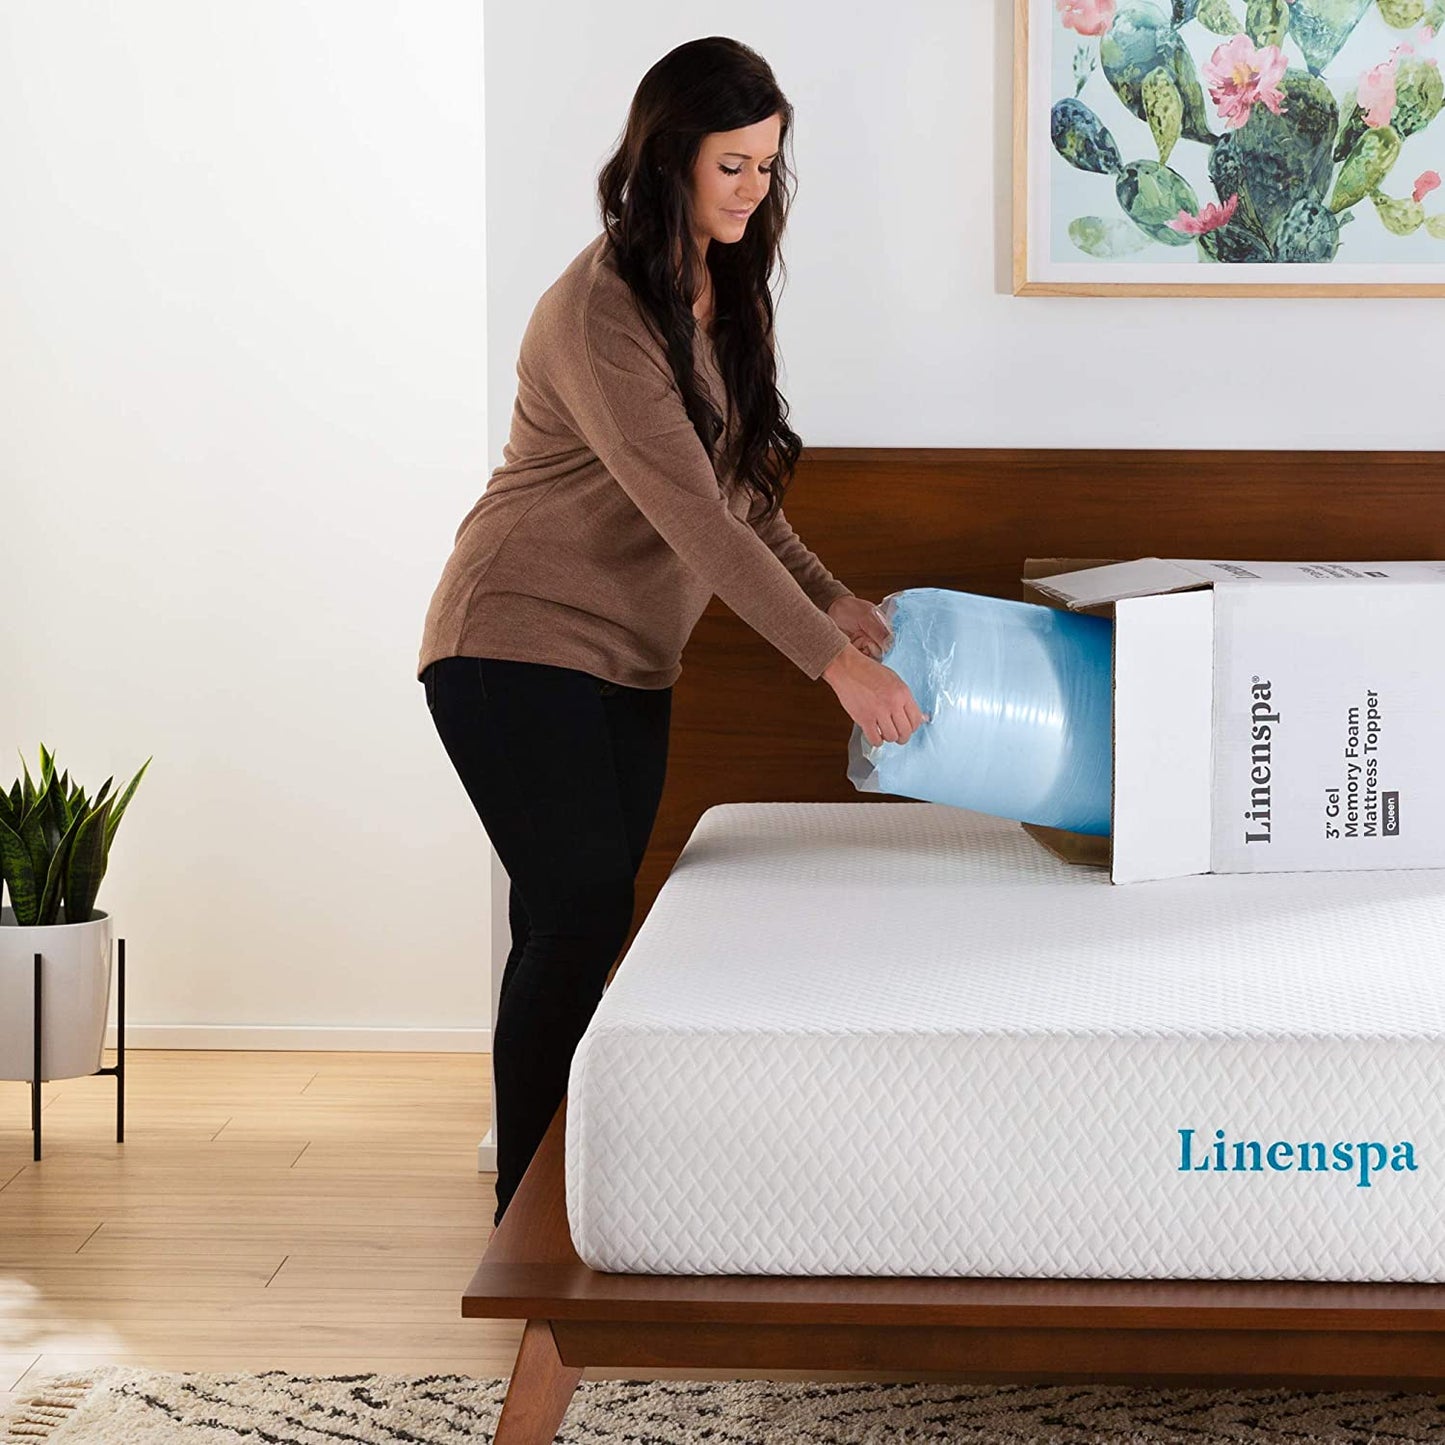 Linenspa 3 Inch Gel Infused Memory Foam Mattress Topper, Queen, 3 Inch - Airbnb Ambassador